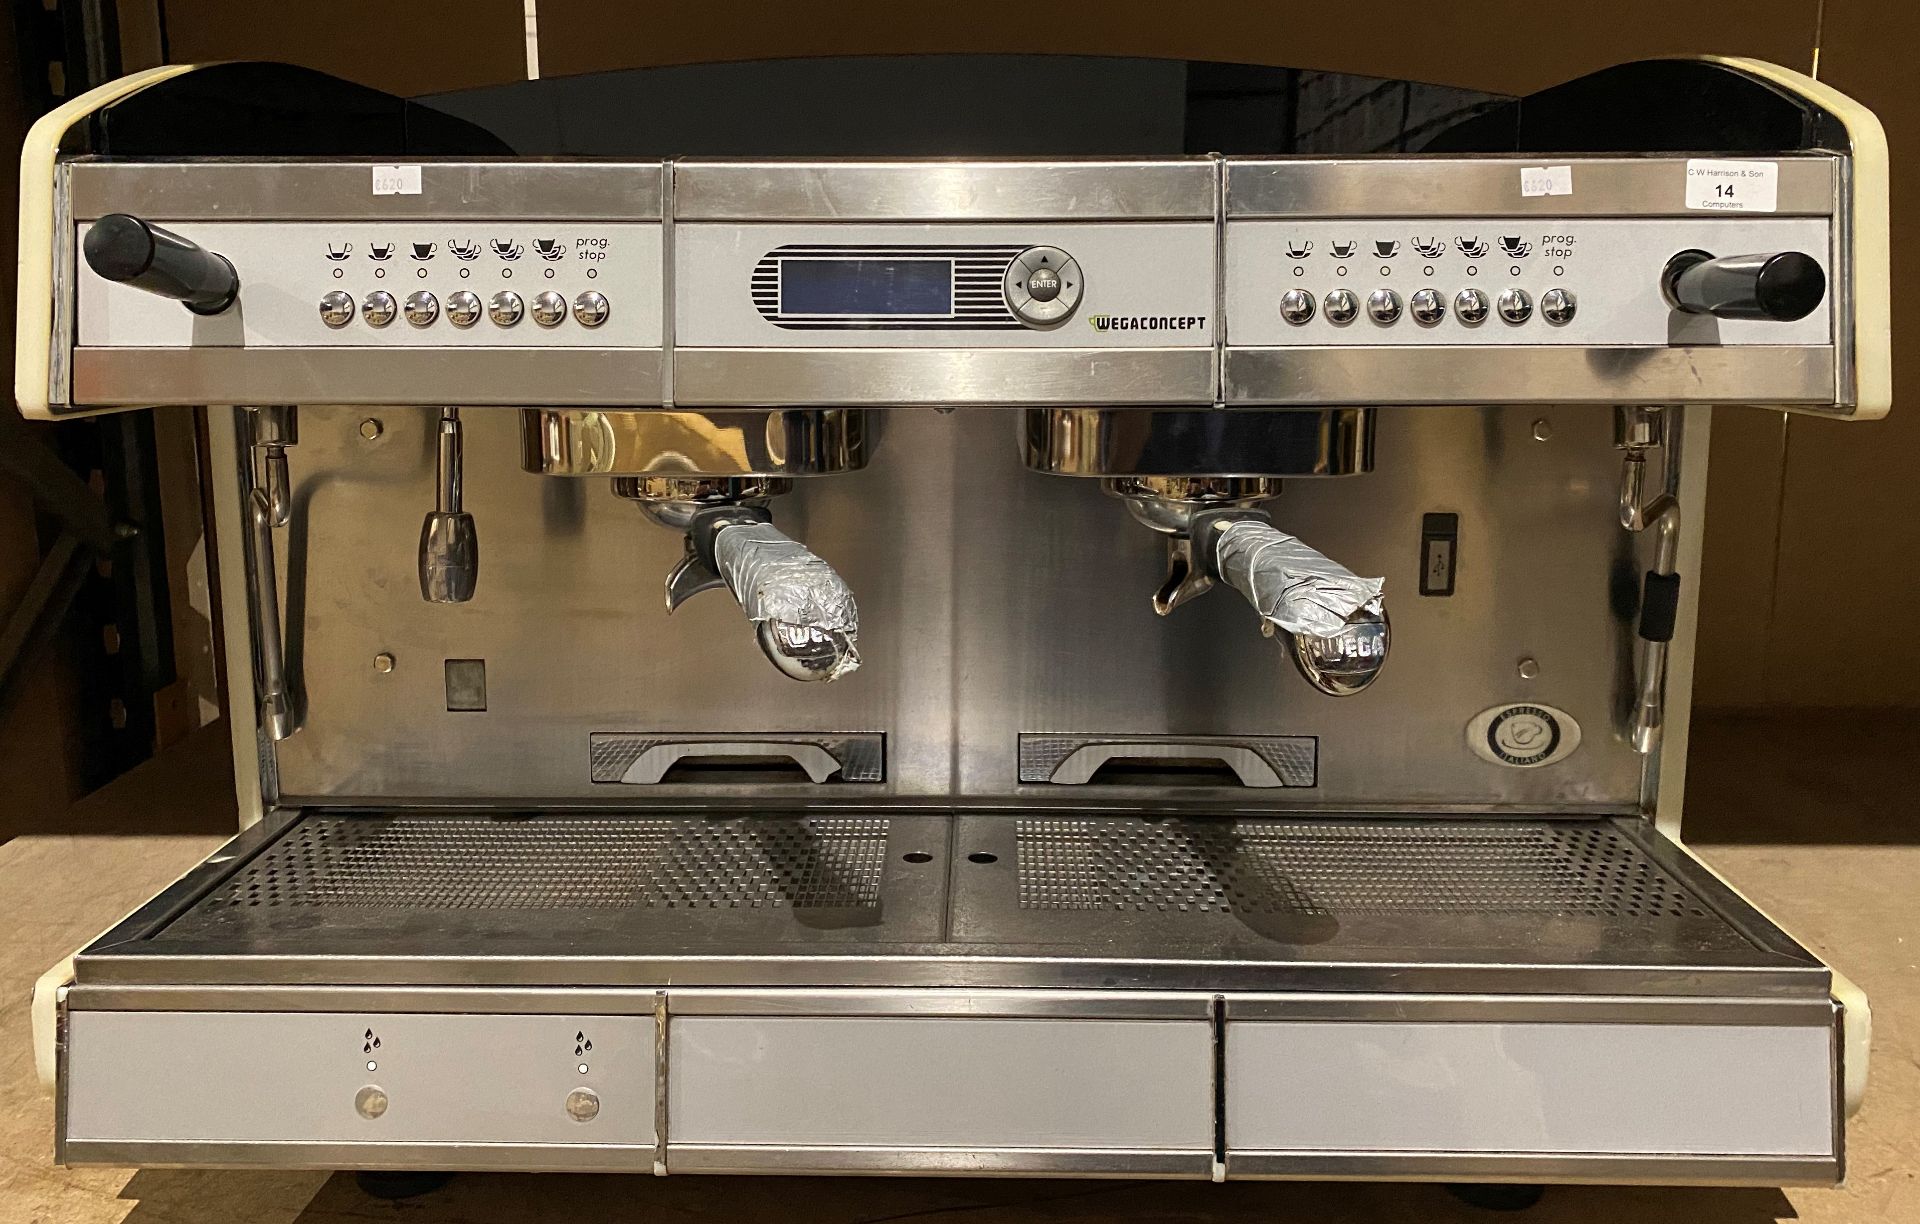 A WEGACONCEPT Espresso Italiano table top coffee machine - 240v - needs rewiring,